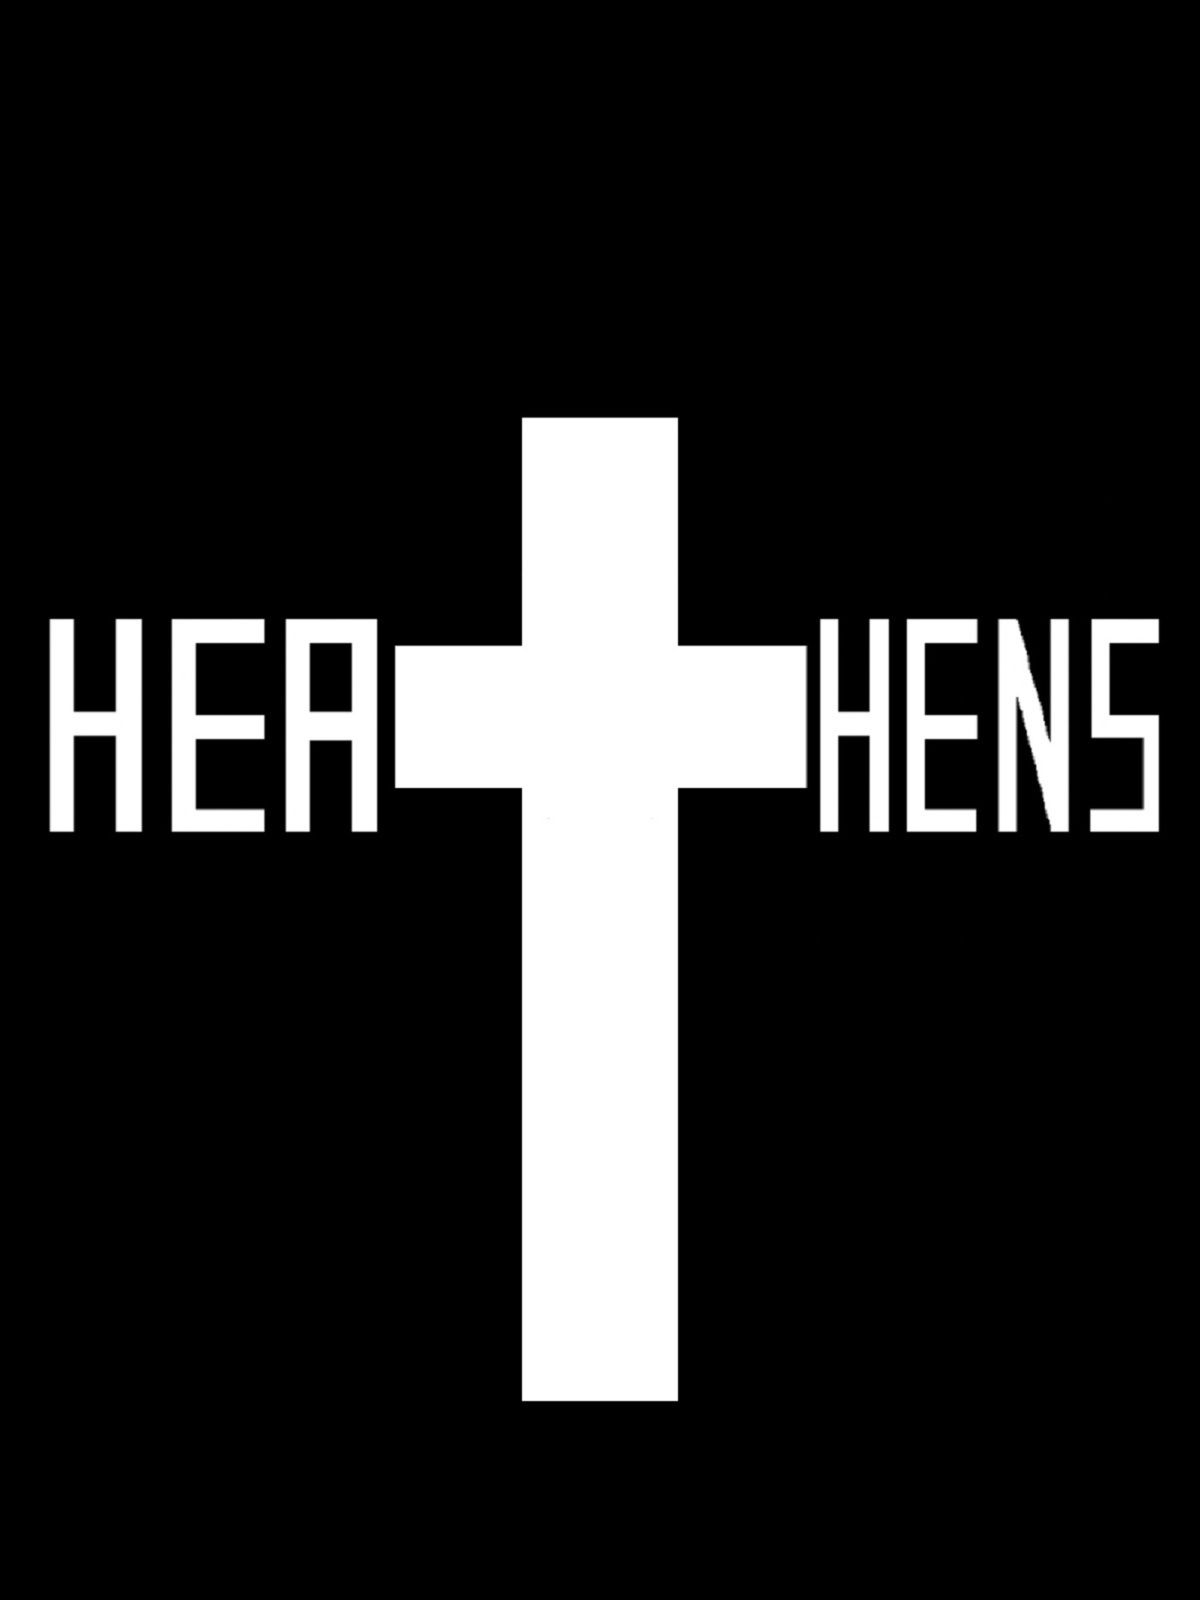 18: Heathens: Part time religious people